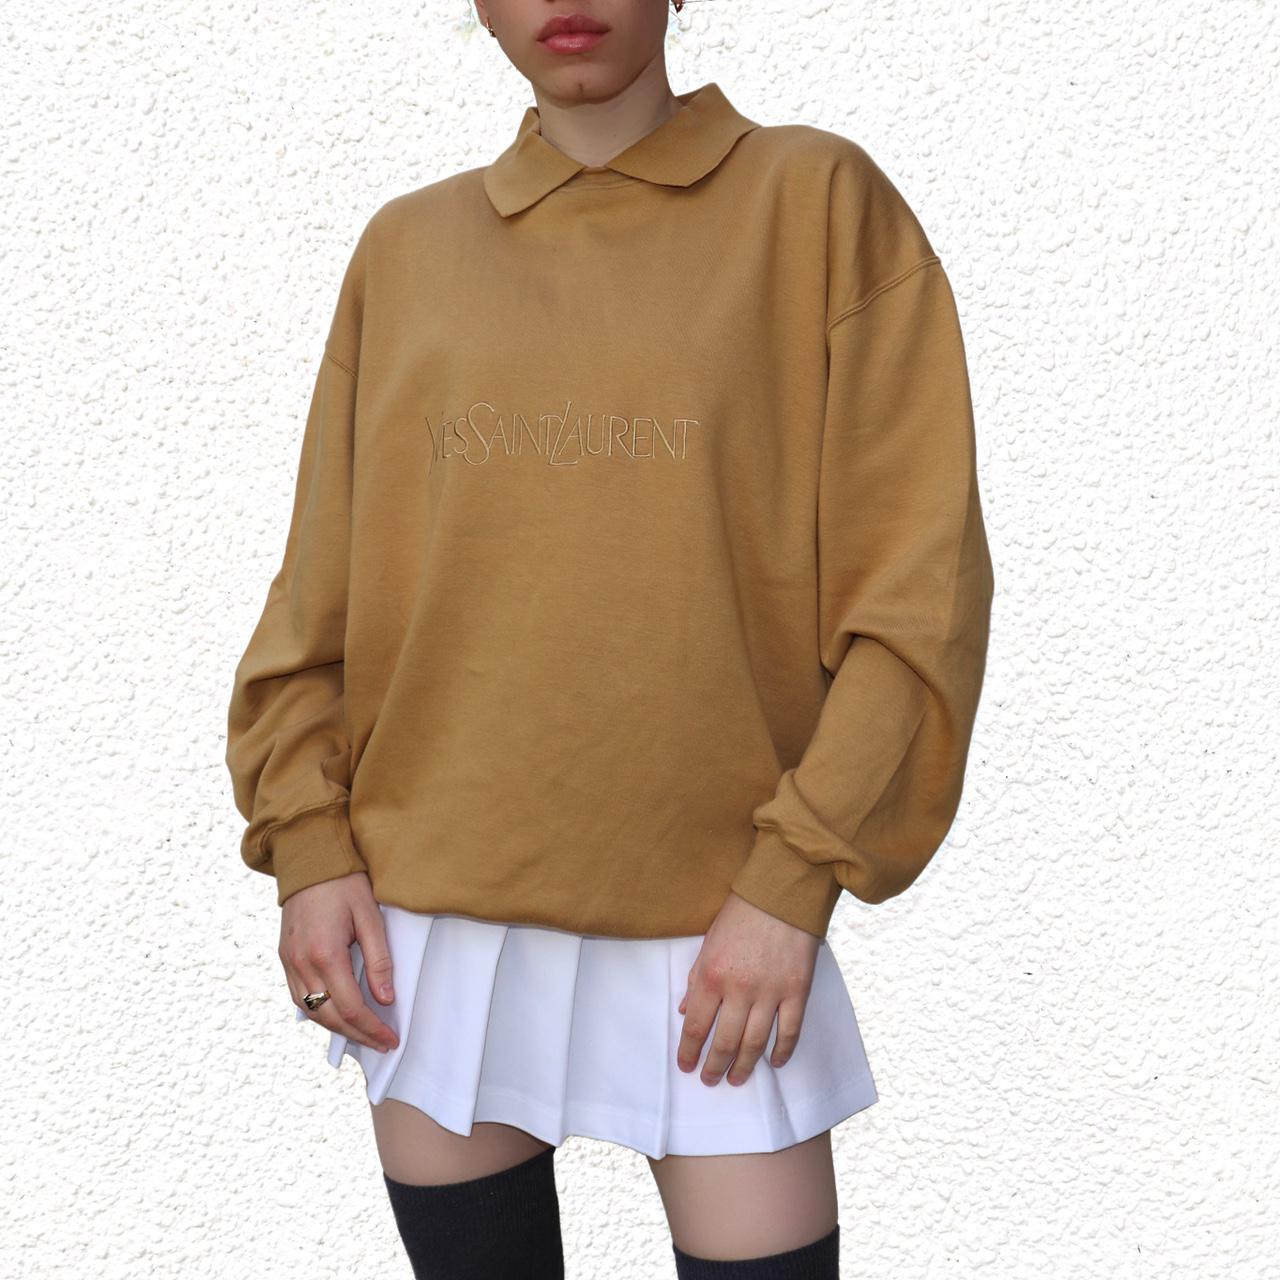 YVES SAINT LAURENT vintage sweater - tan beige with... - Depop